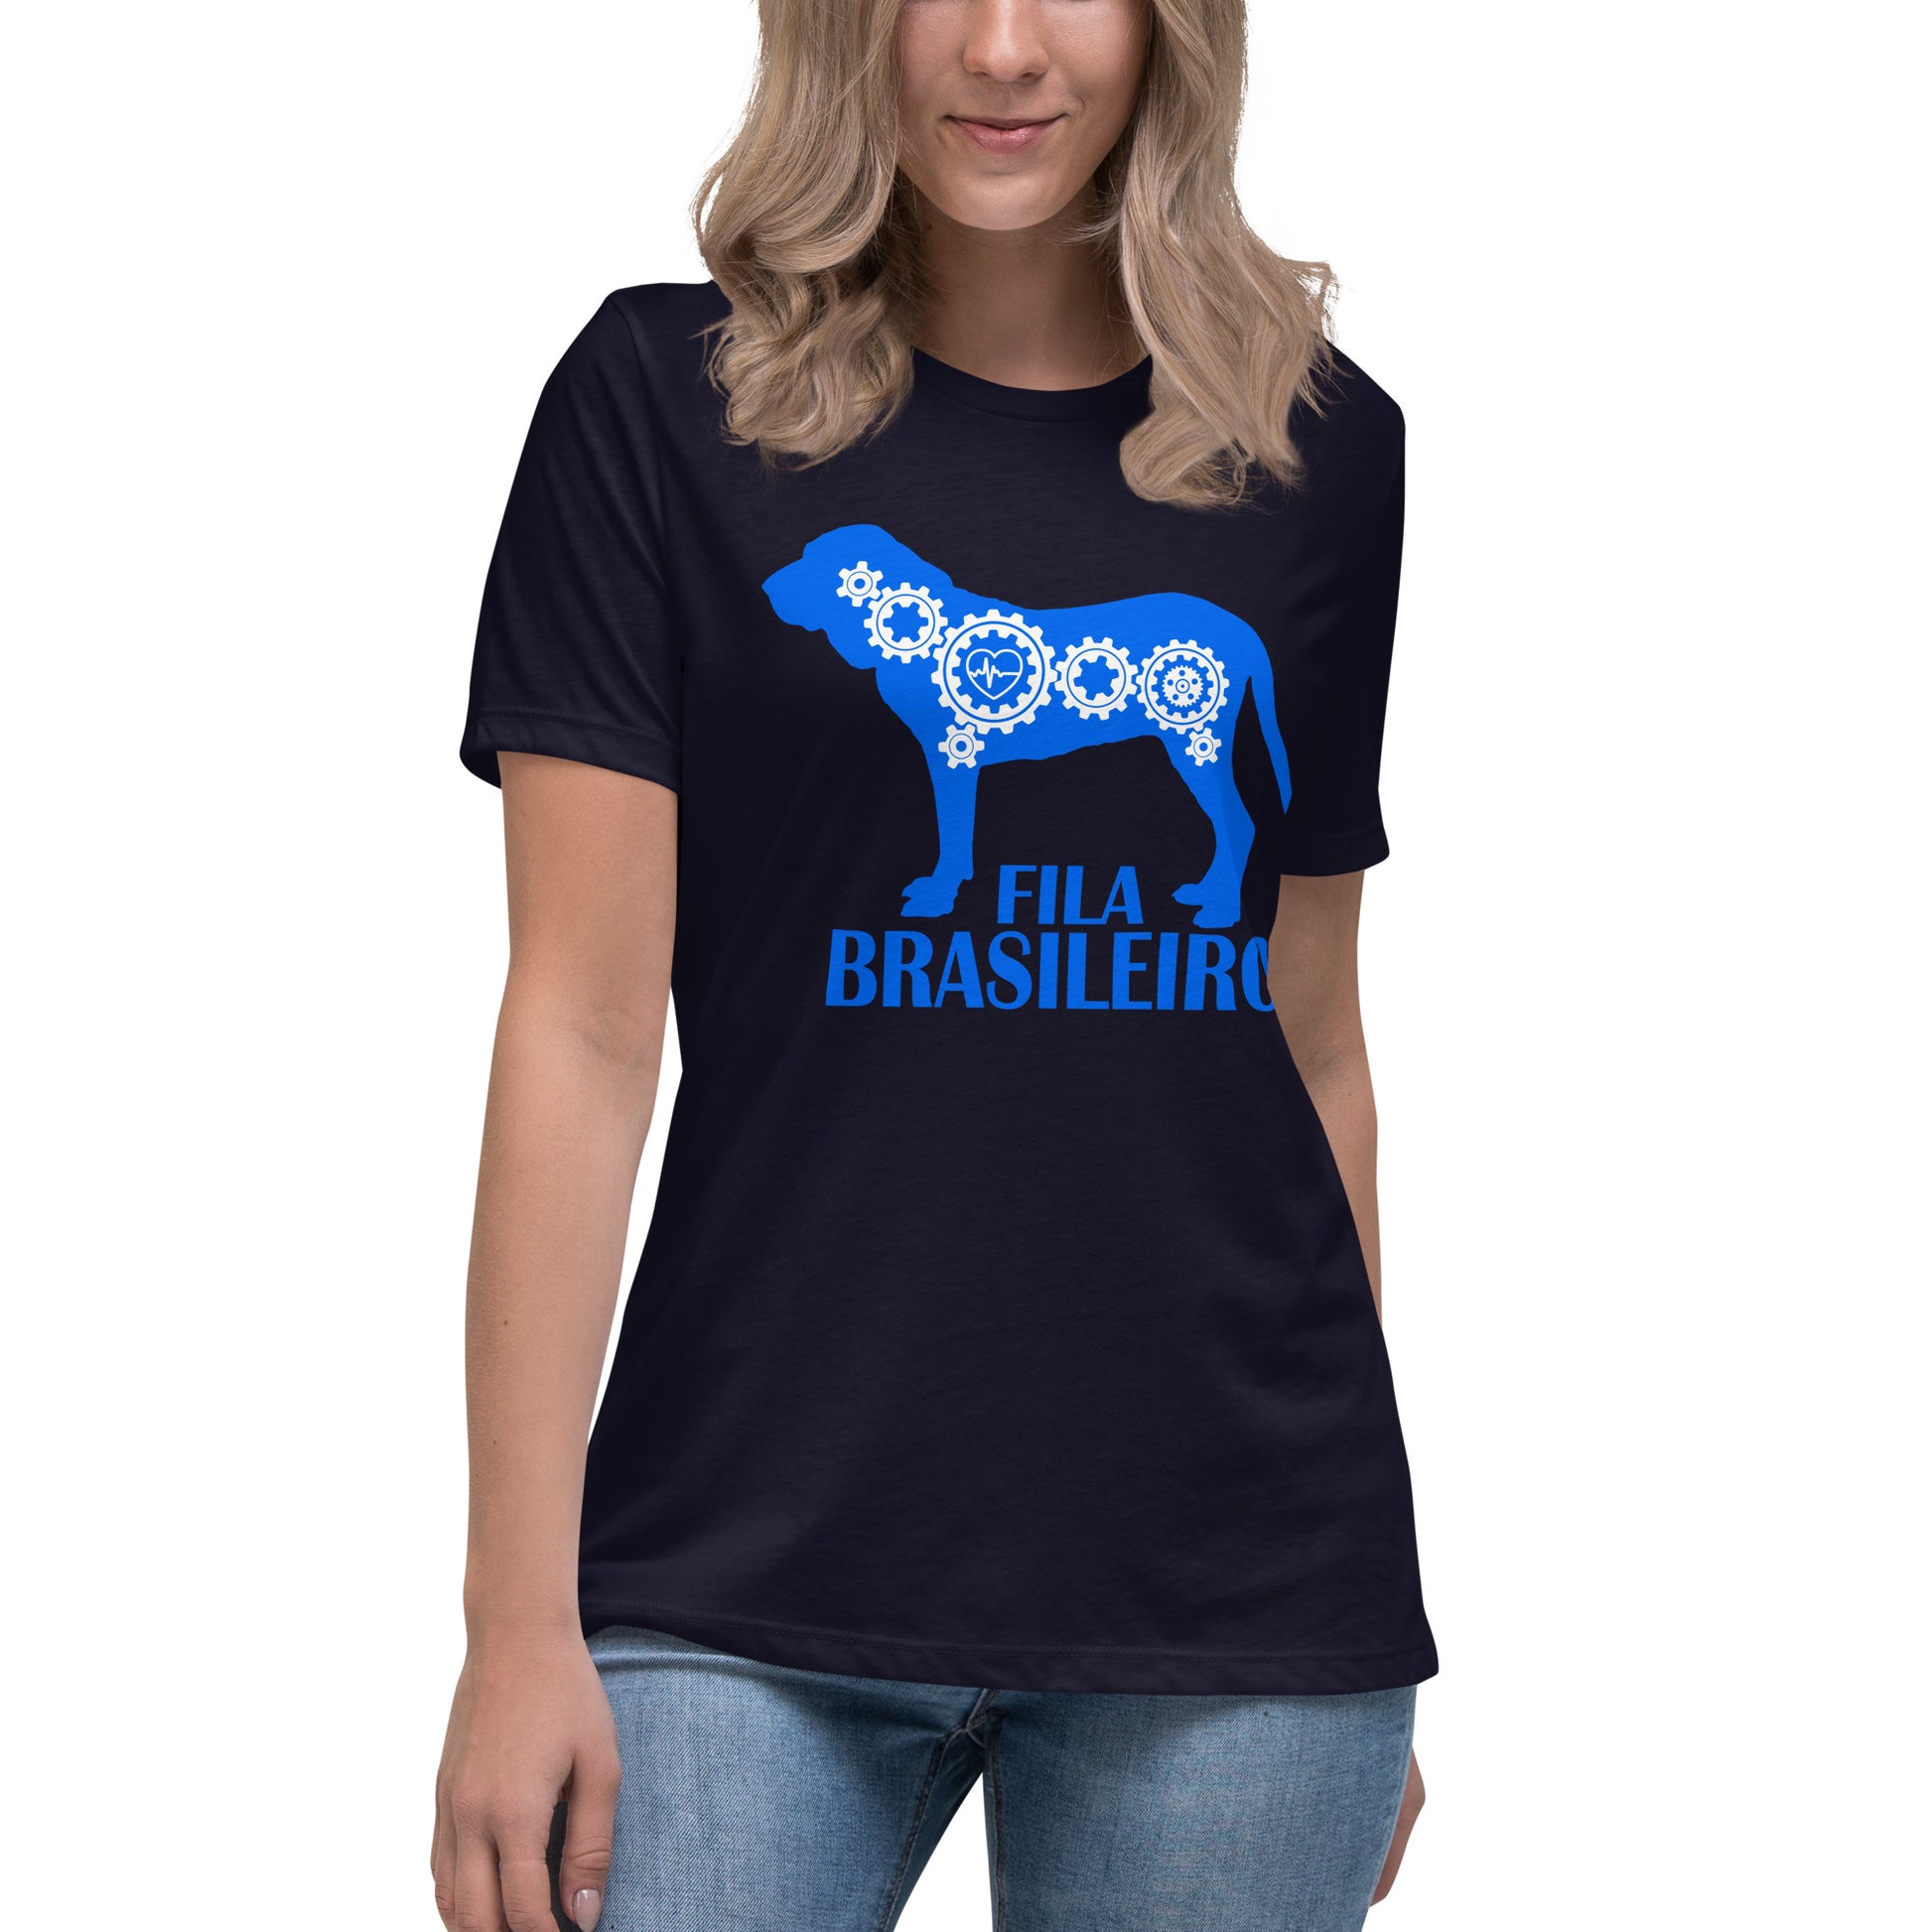 Fila Brasileiro Bionic women’s navy t-shirt by Dog Artistry.